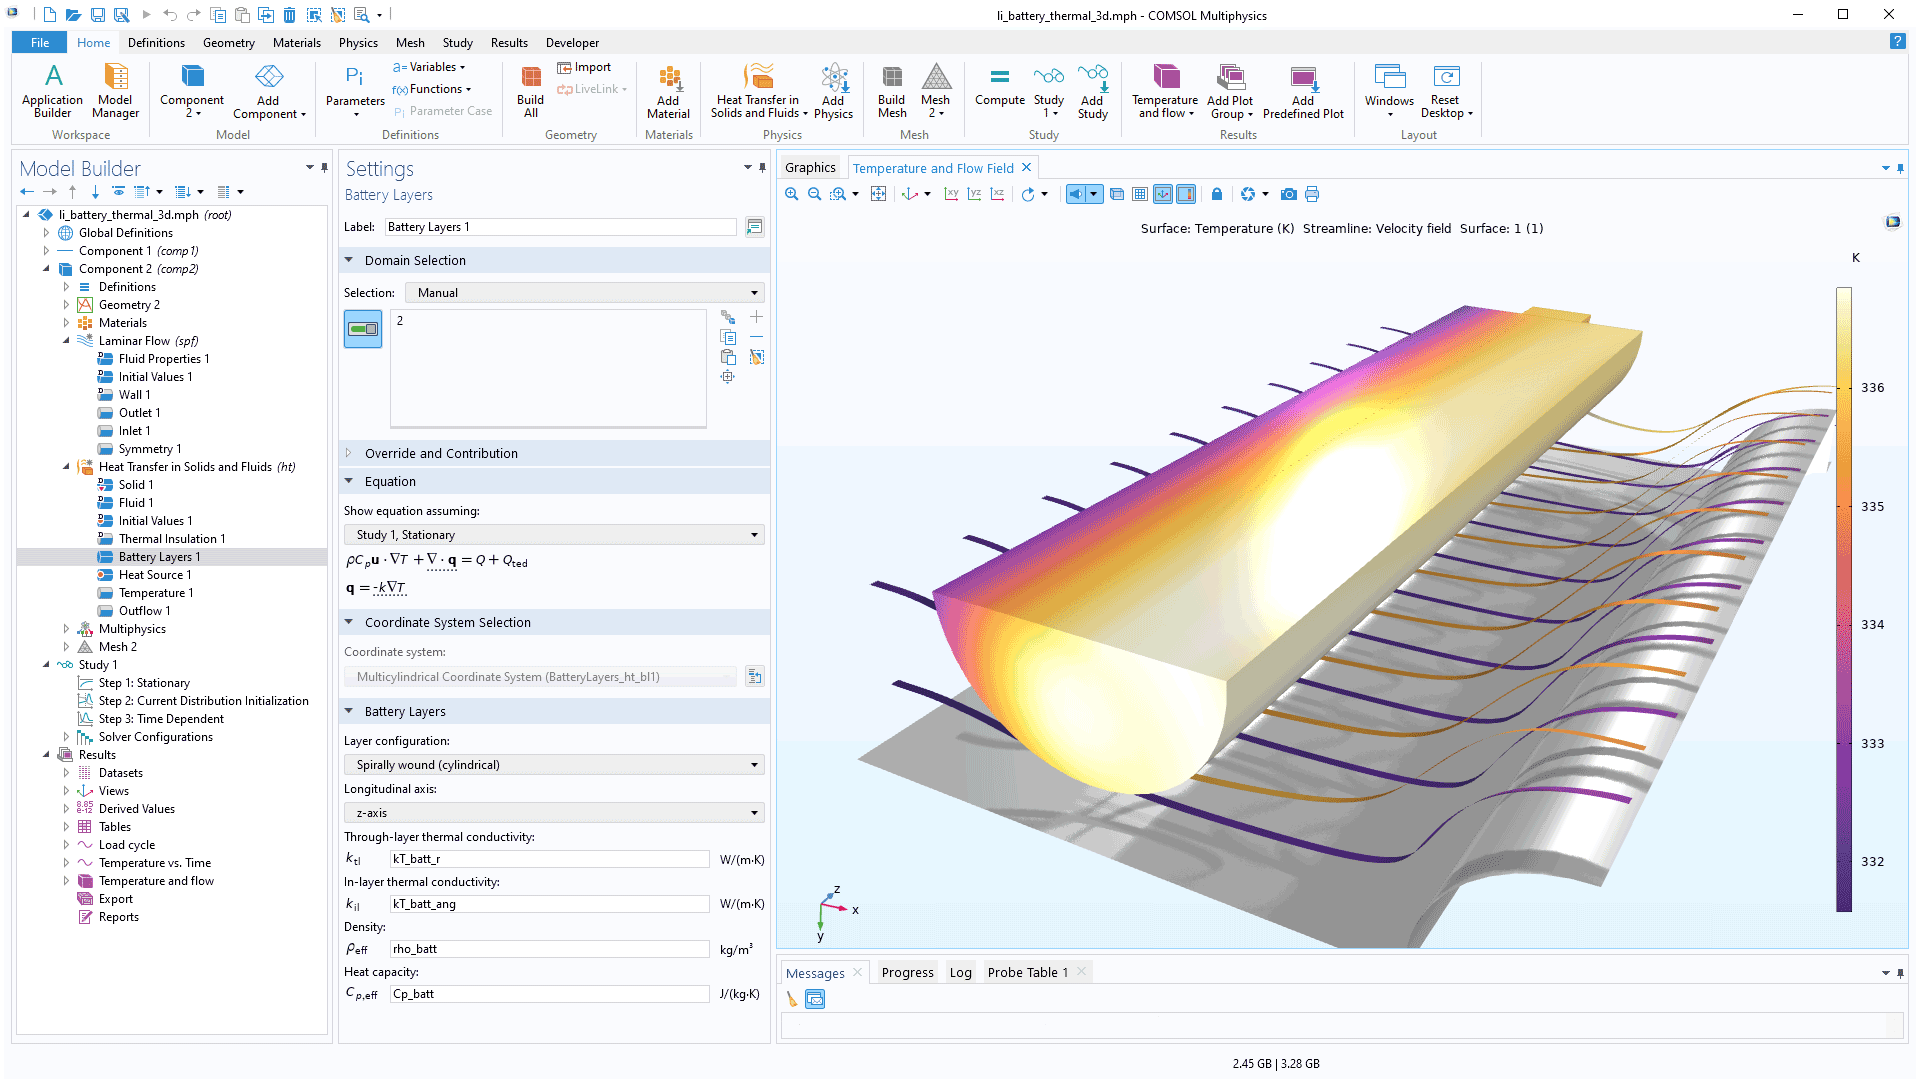 COMSOL Multiphysics 用户界面，显示了“模型开发器”，其中突出显示“电池层”节点，并显示其对应的“设置”窗口；“图形”窗口中显示锂电池模型。